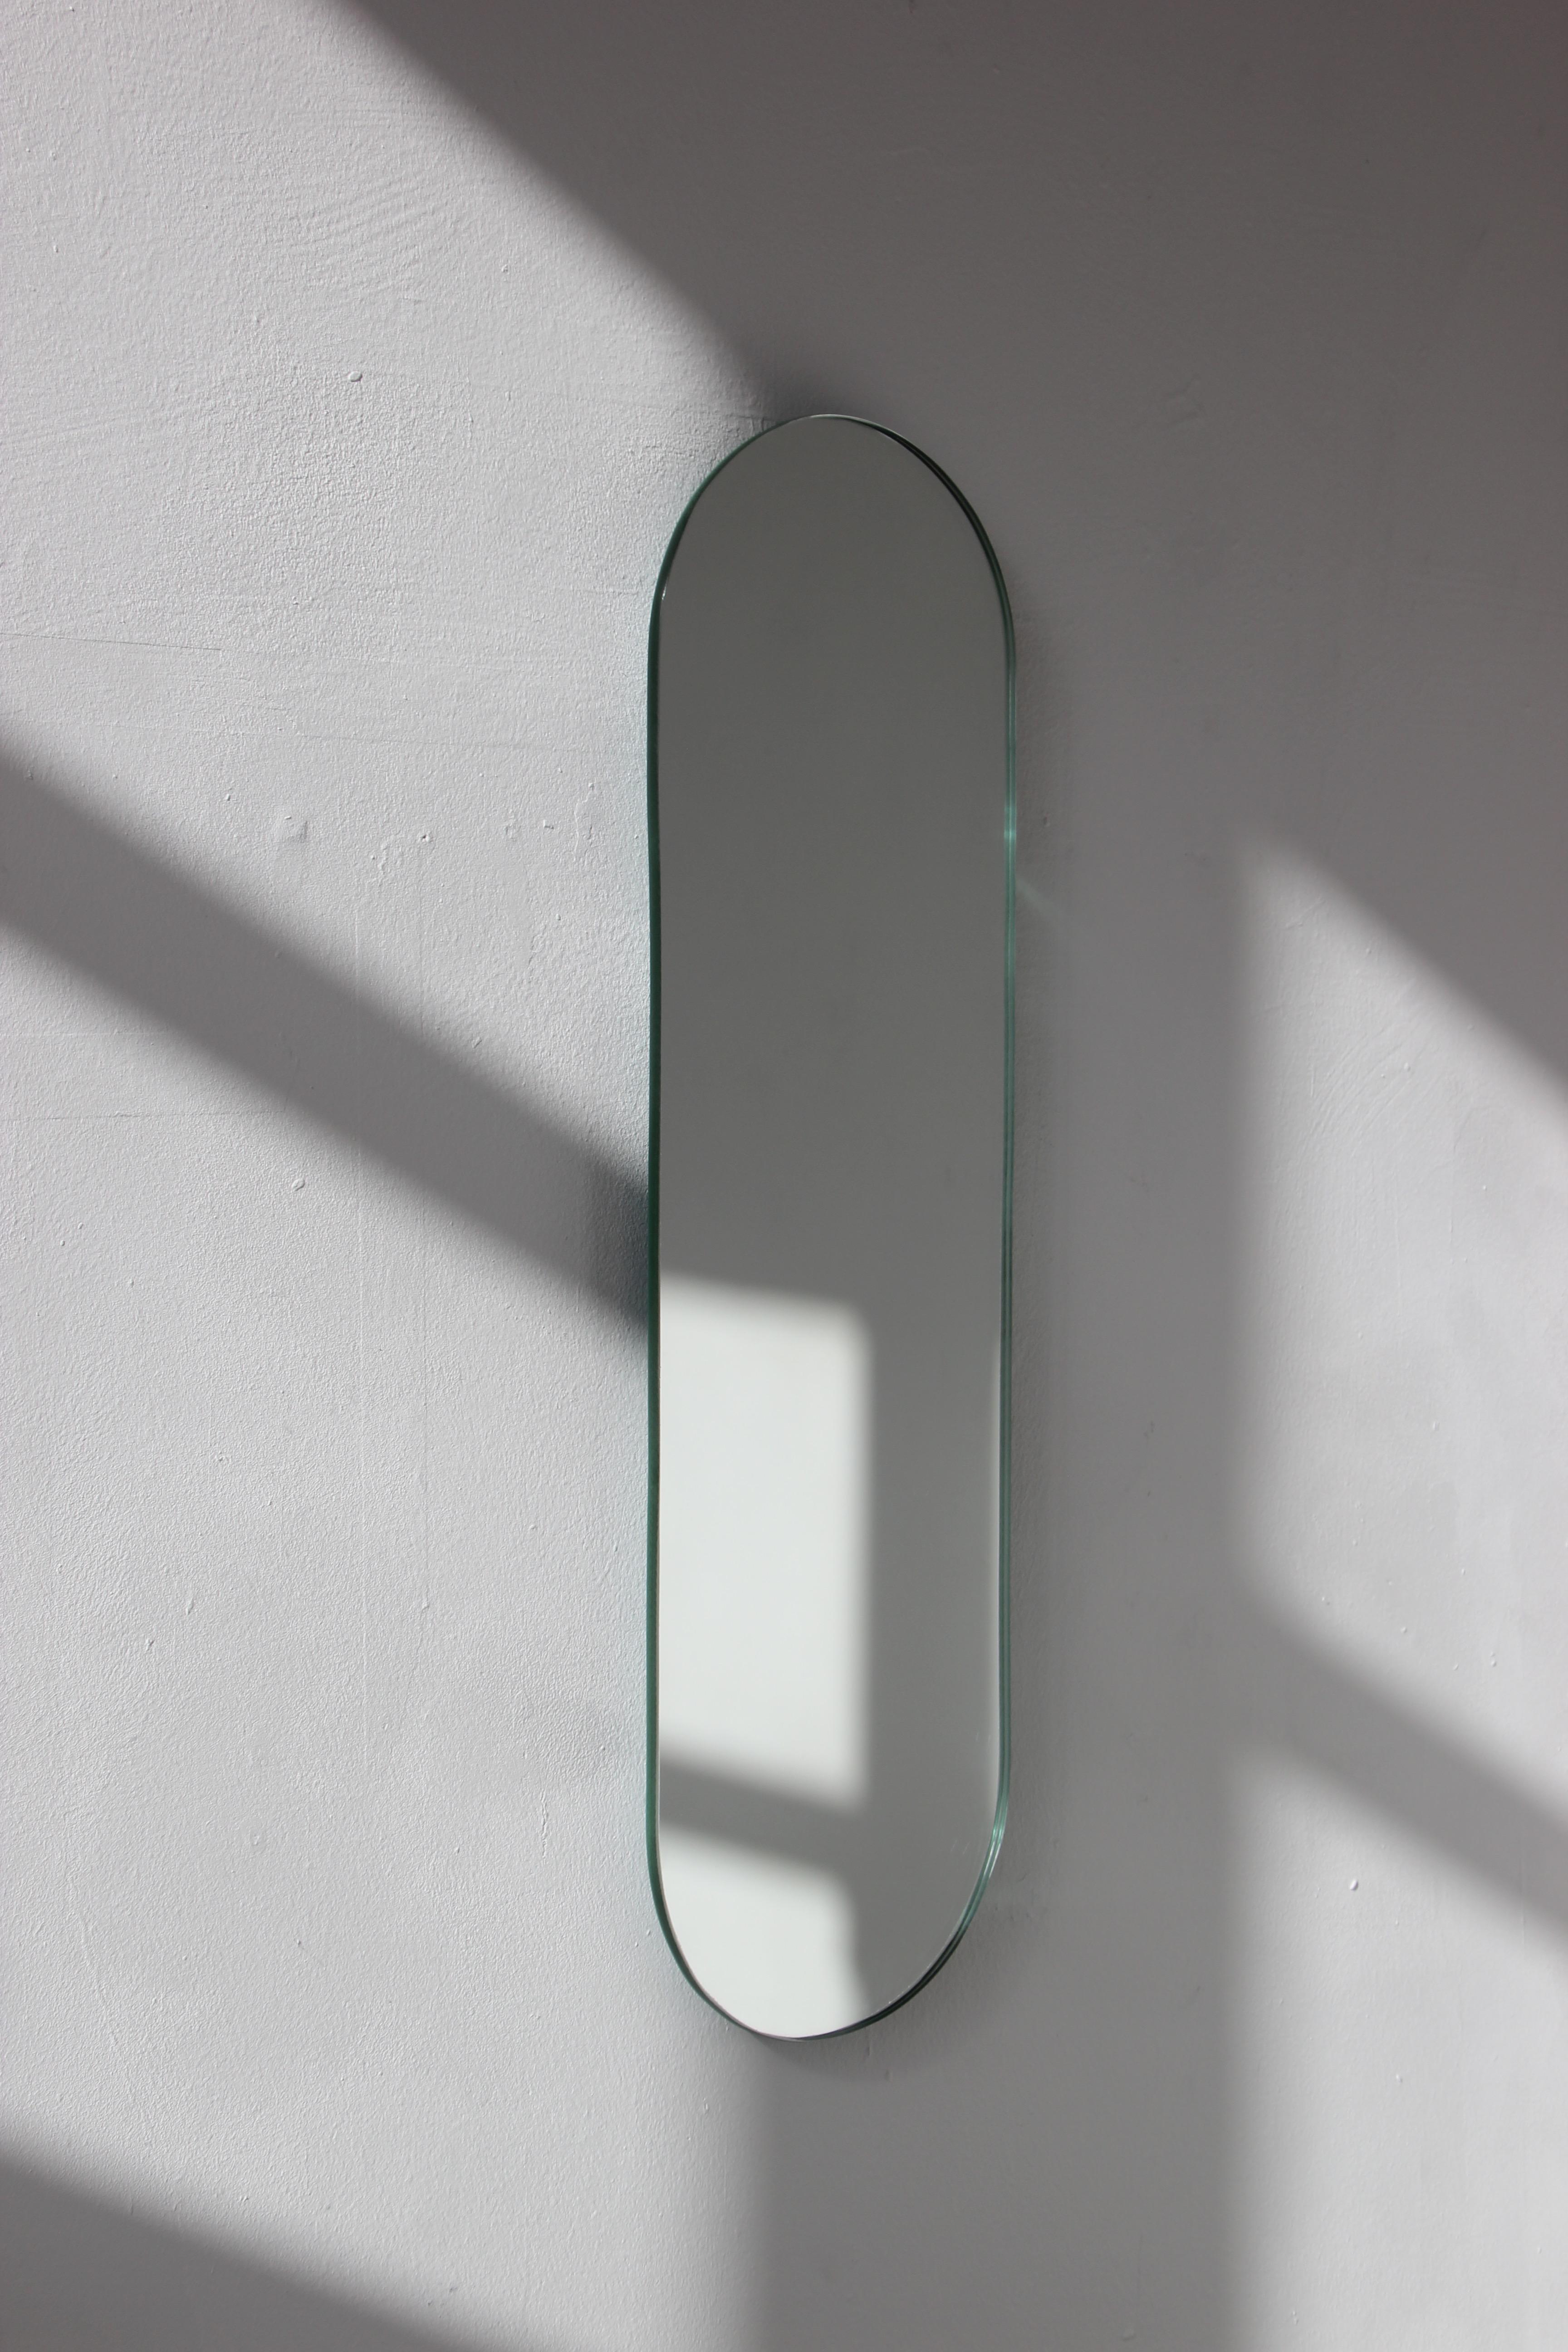 pill shaped full length mirror